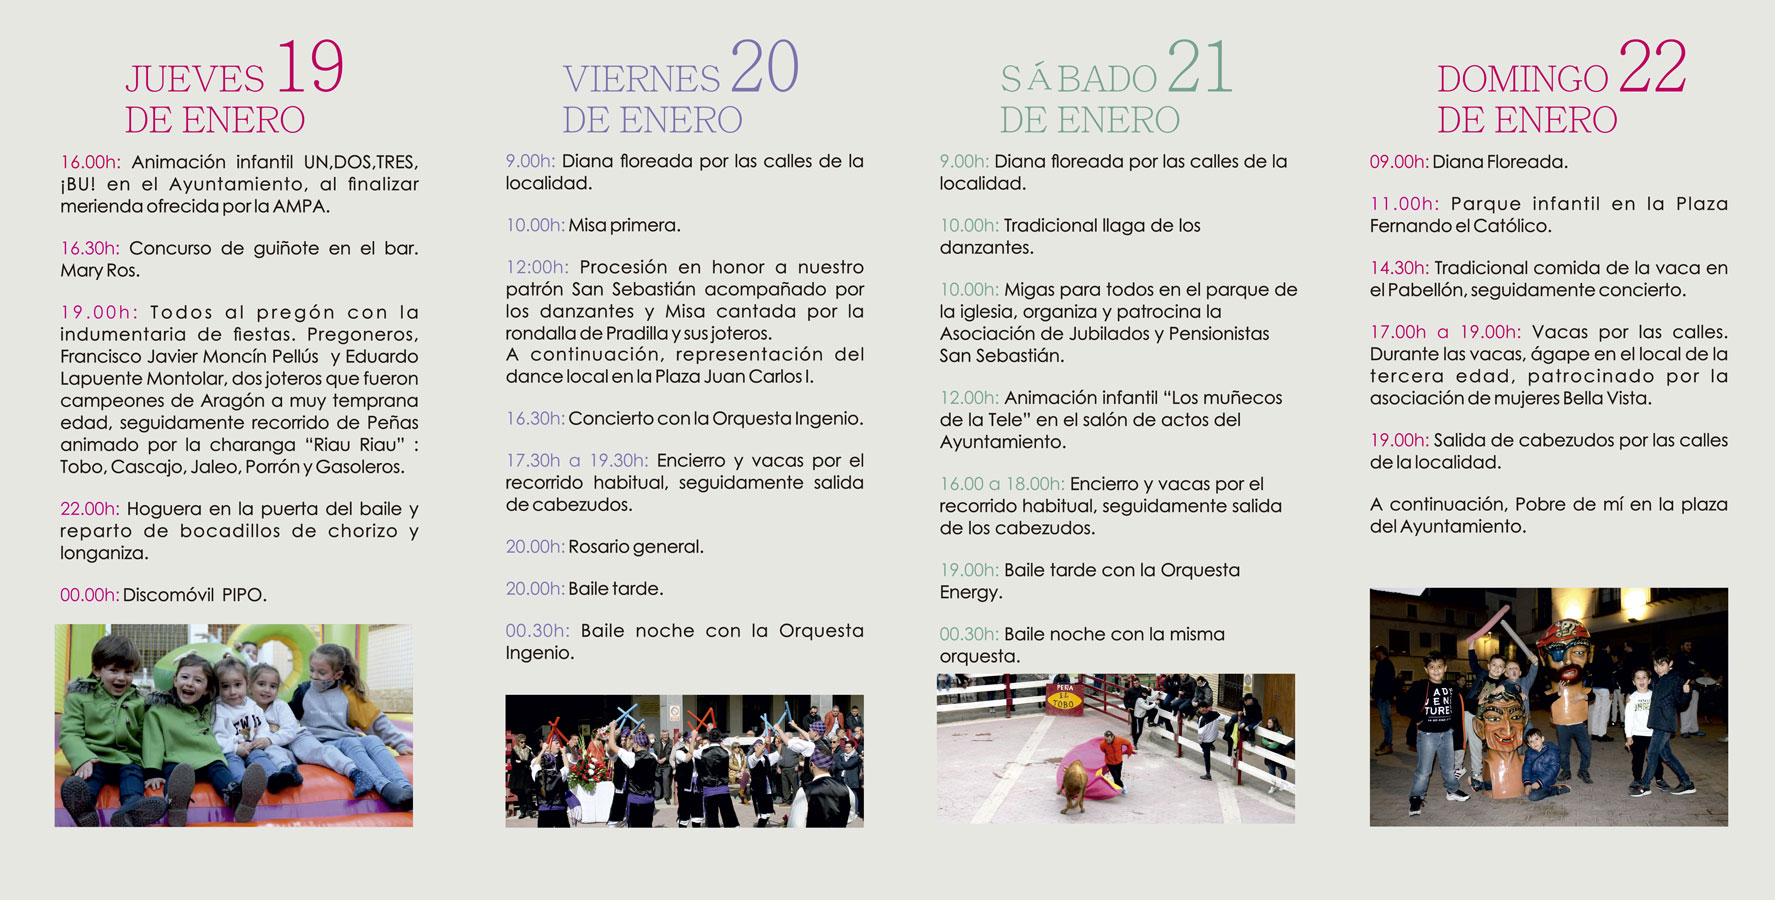 Programa de Fiestas en honor a San Sebastián